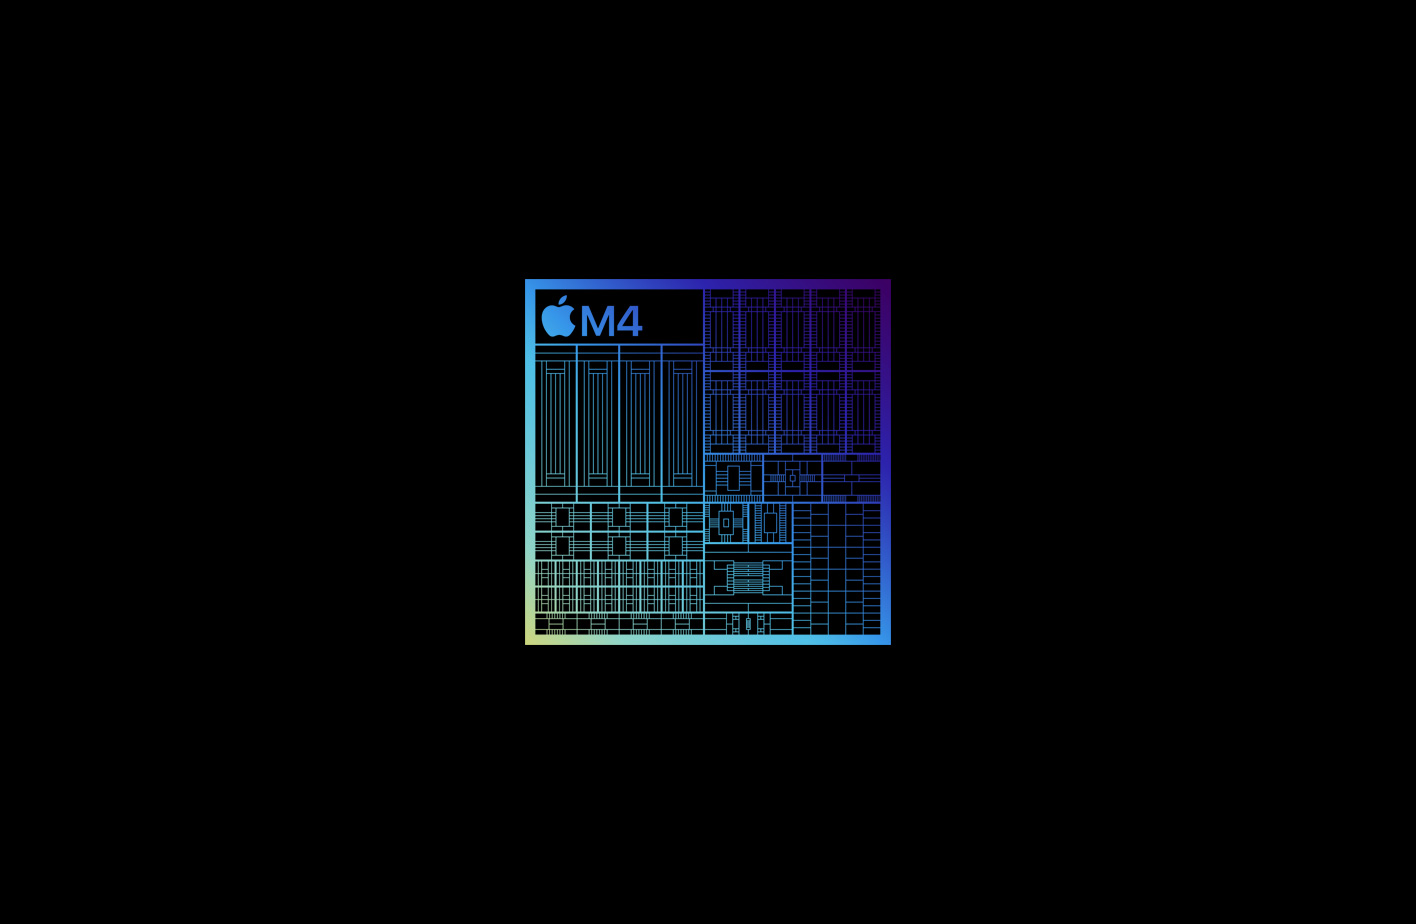 Processador M4 da Apple